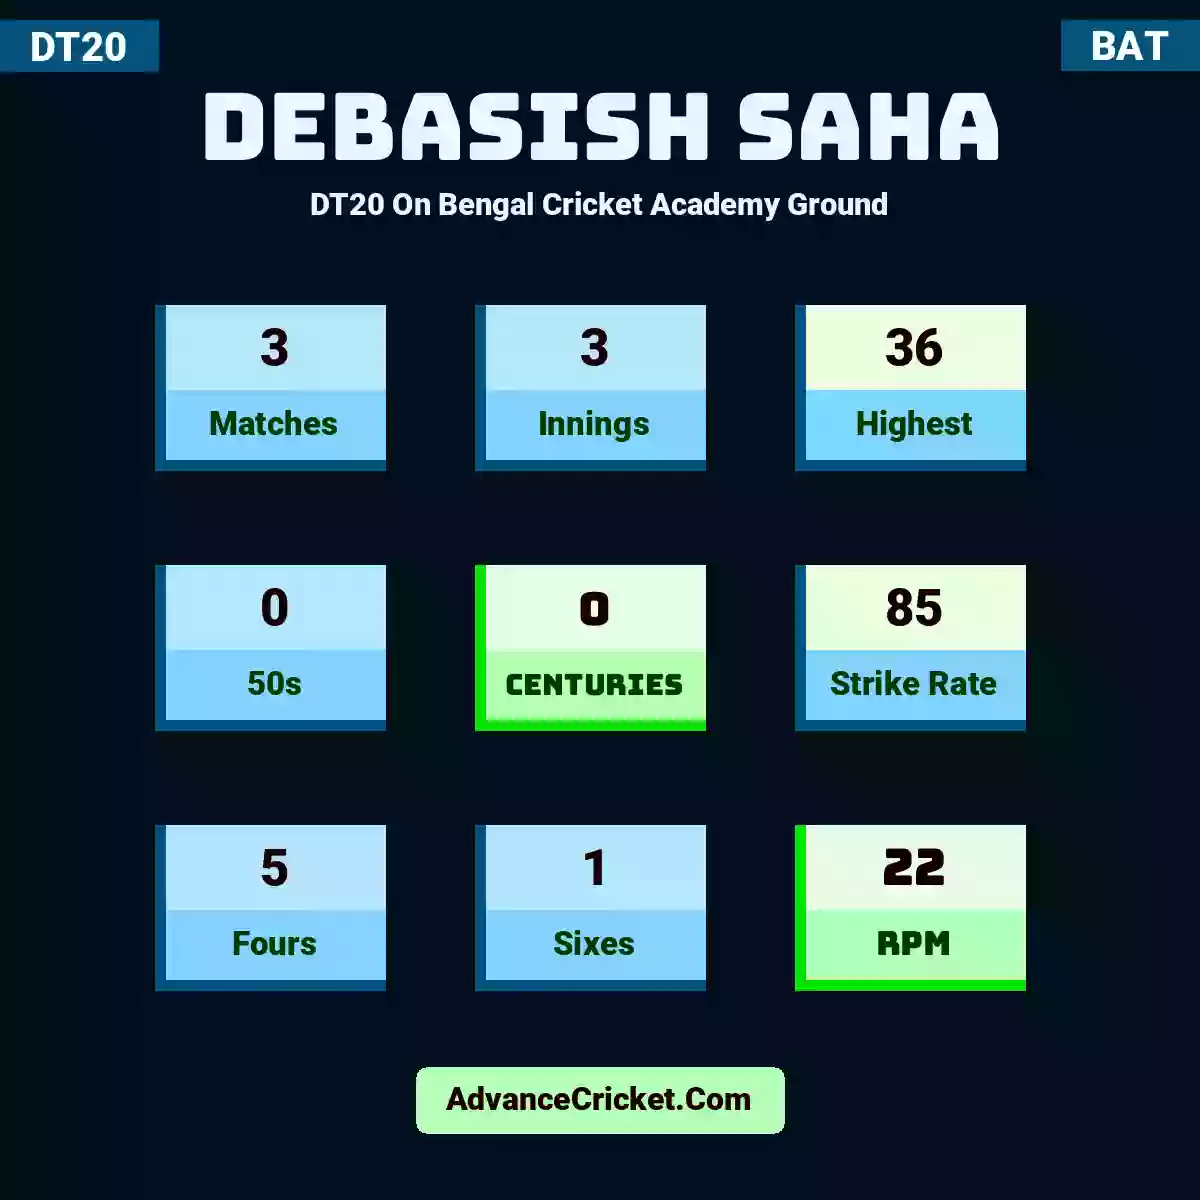 Debasish Saha DT20  On Bengal Cricket Academy Ground, Debasish Saha played 3 matches, scored 36 runs as highest, 0 half-centuries, and 0 centuries, with a strike rate of 85. D.Saha hit 5 fours and 1 sixes, with an RPM of 22.